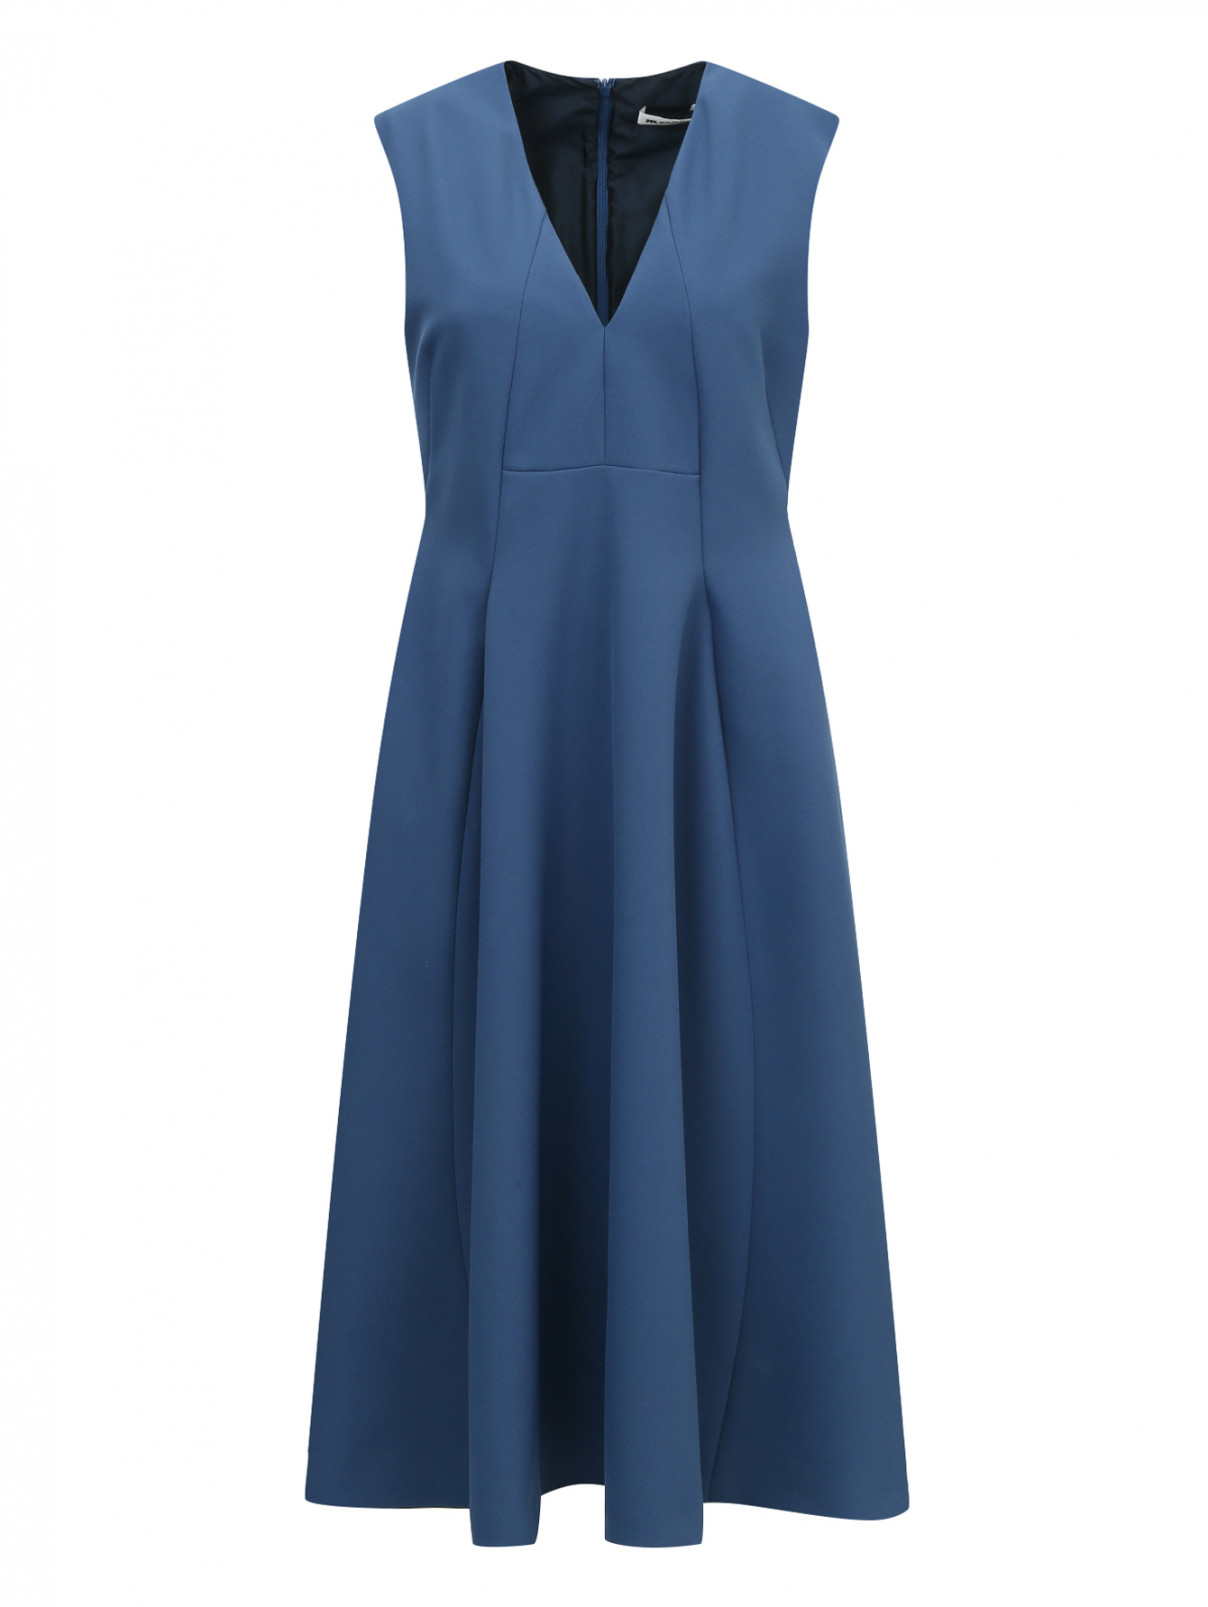 Платье-миди с защипами Jil Sander  –  Общий вид  – Цвет:  Синий